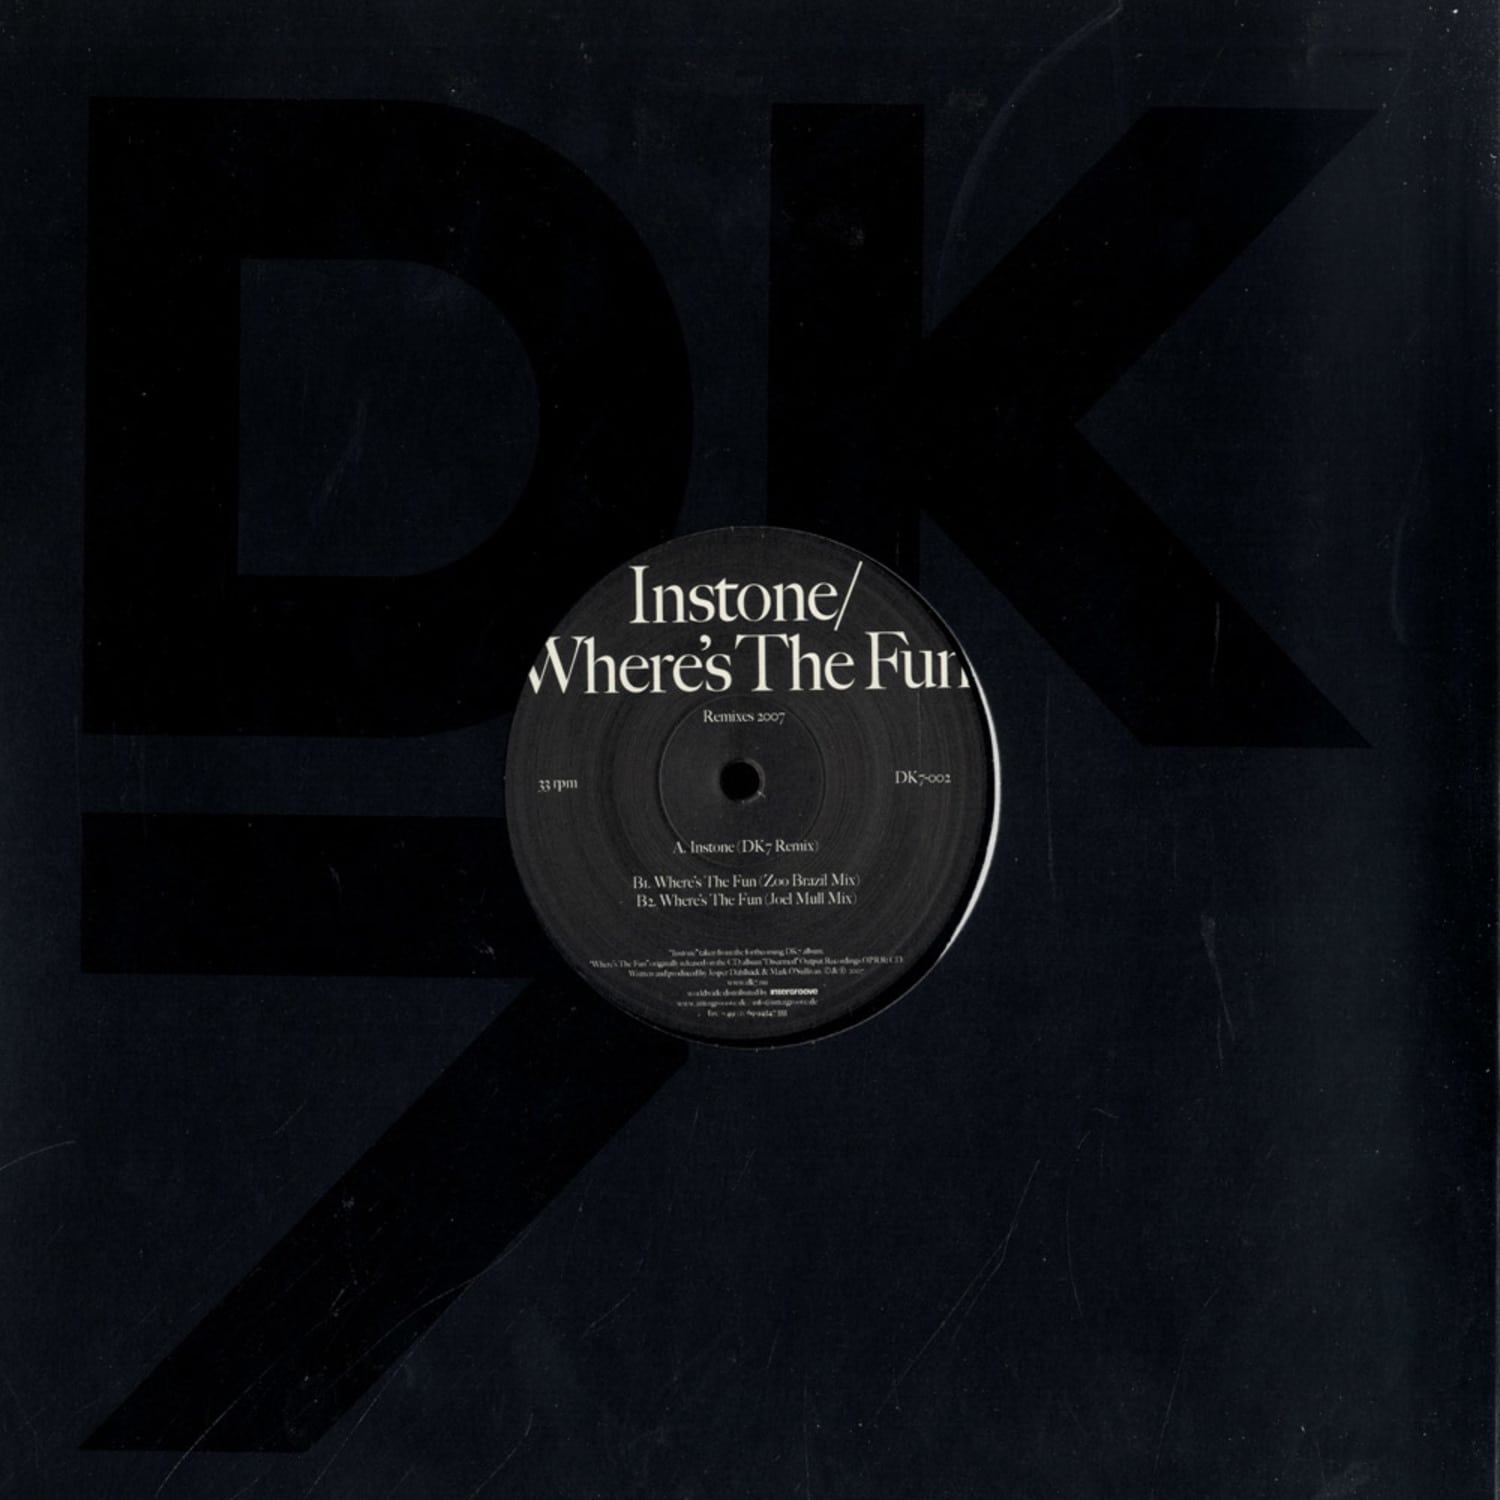 DK7 - INSTONE / WHERES THE FUNK